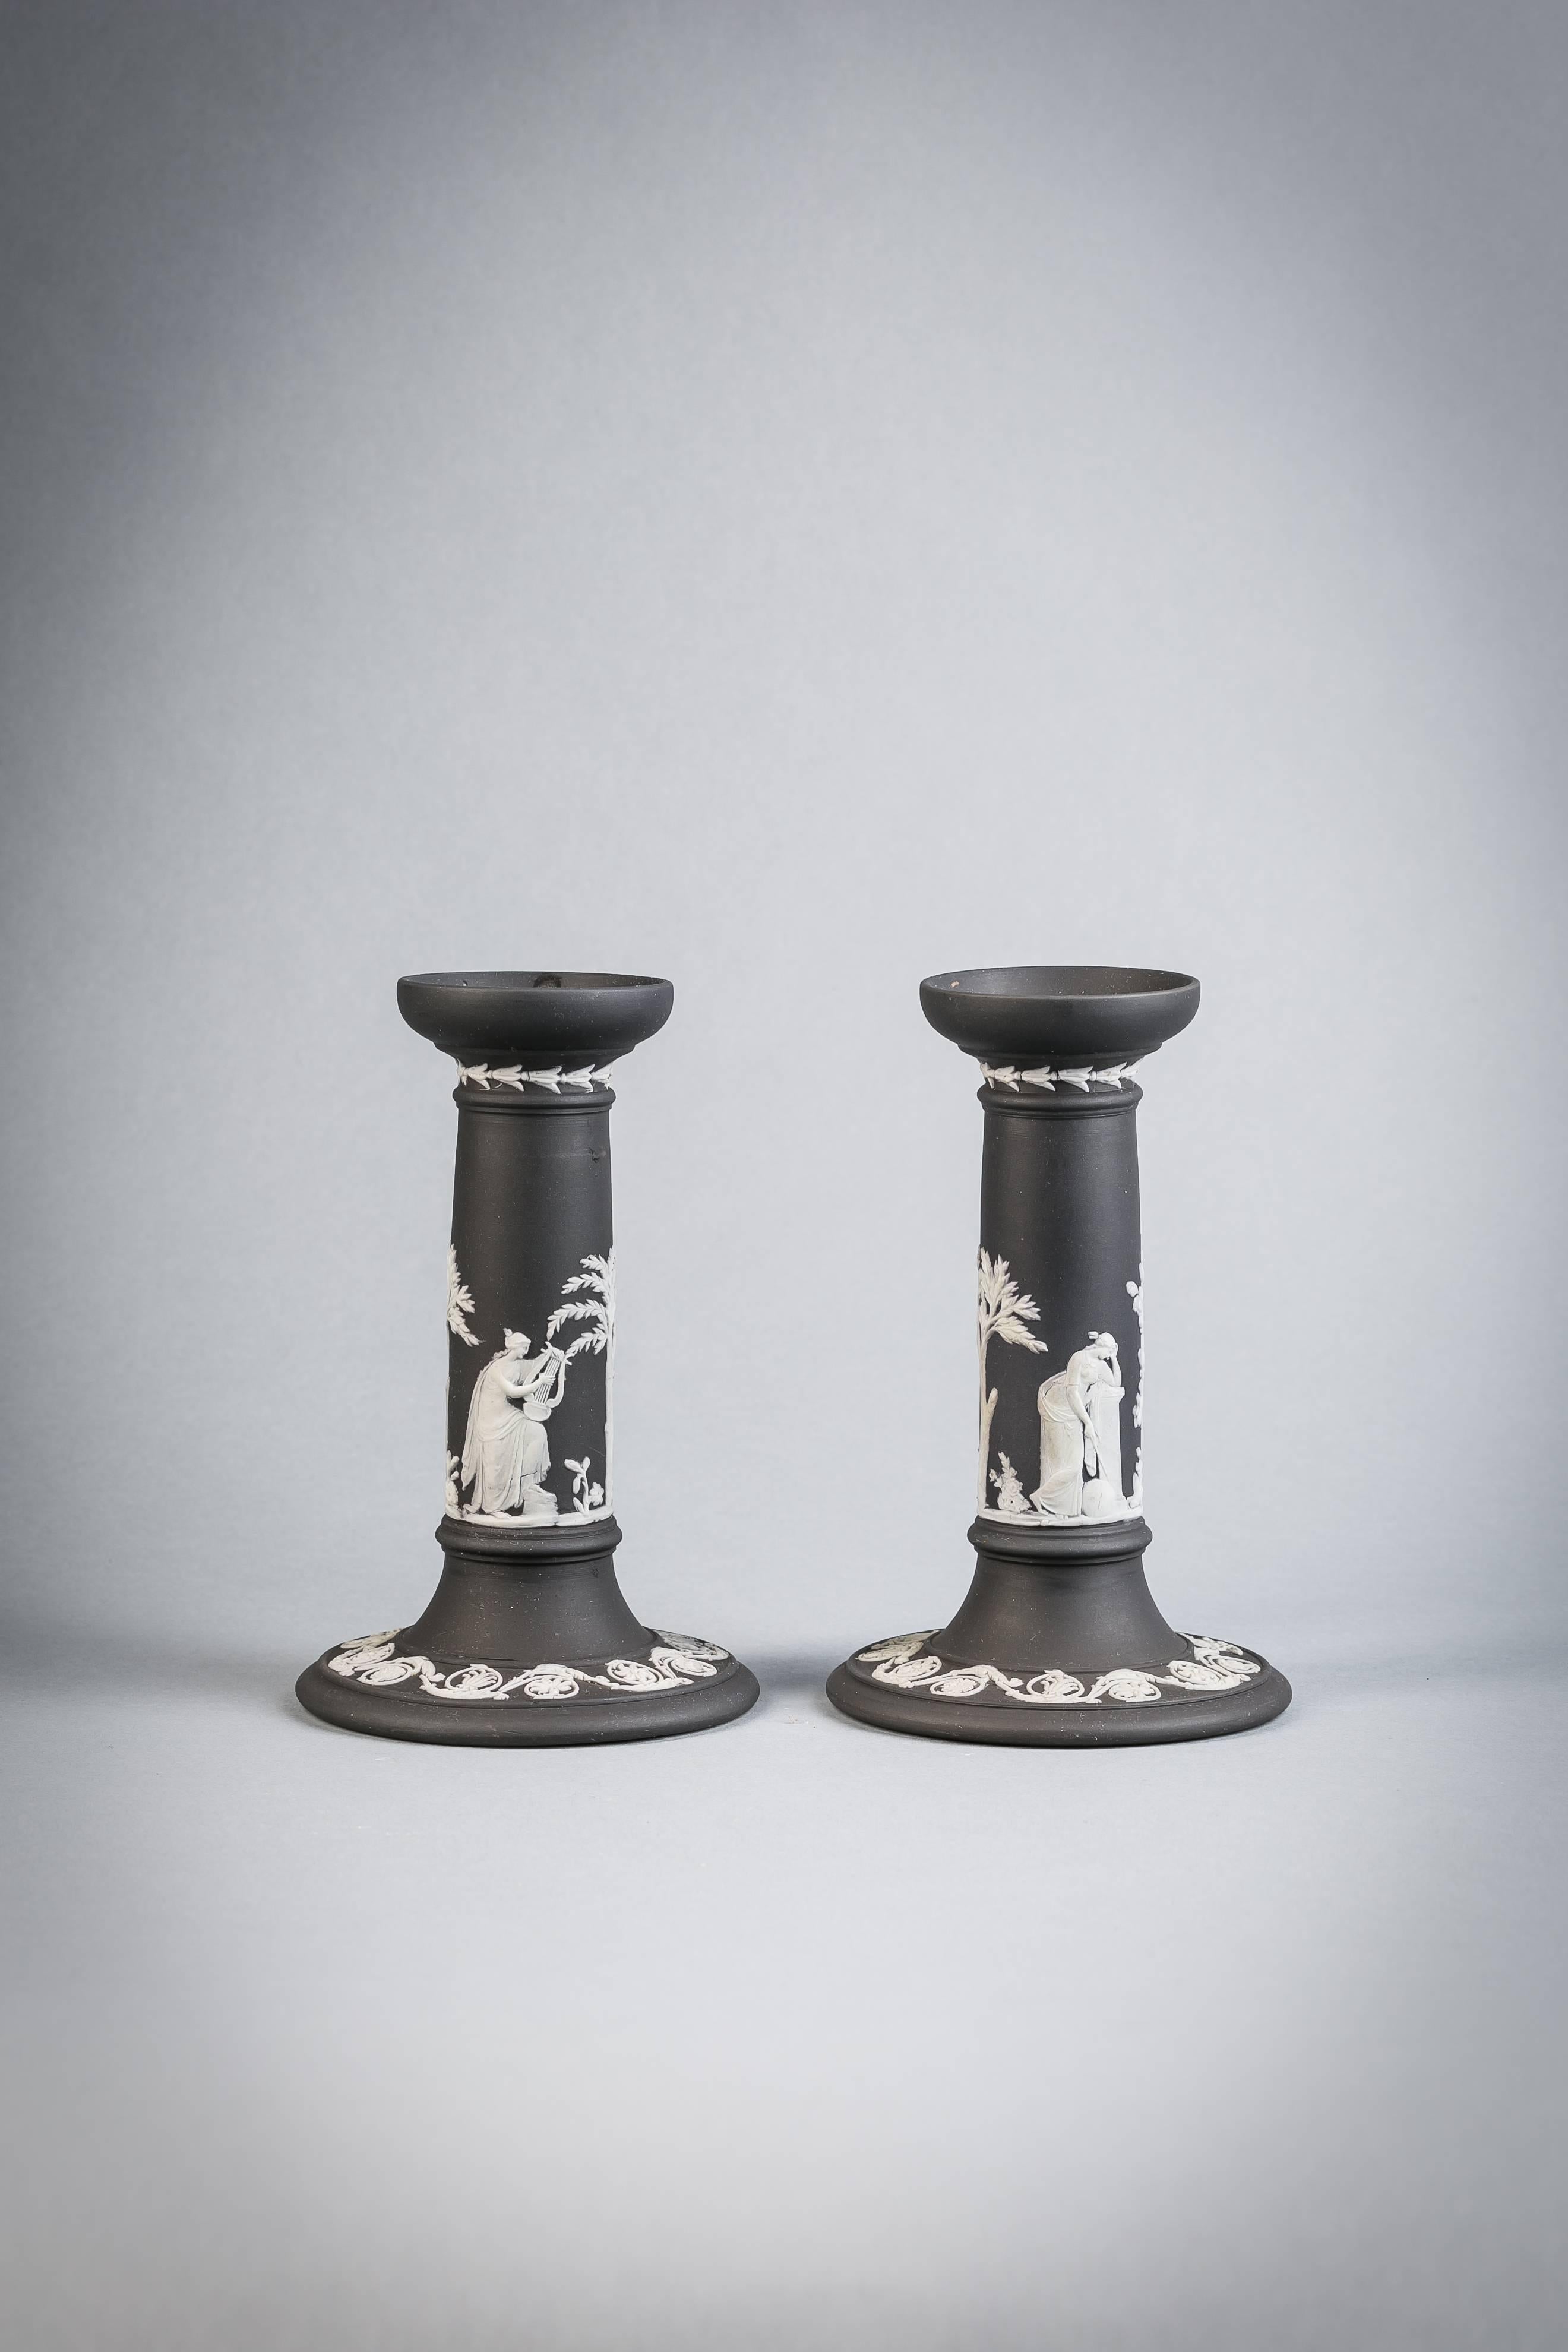 Pair of black and white Wedgwood Basalt candlesticks, 19th century.